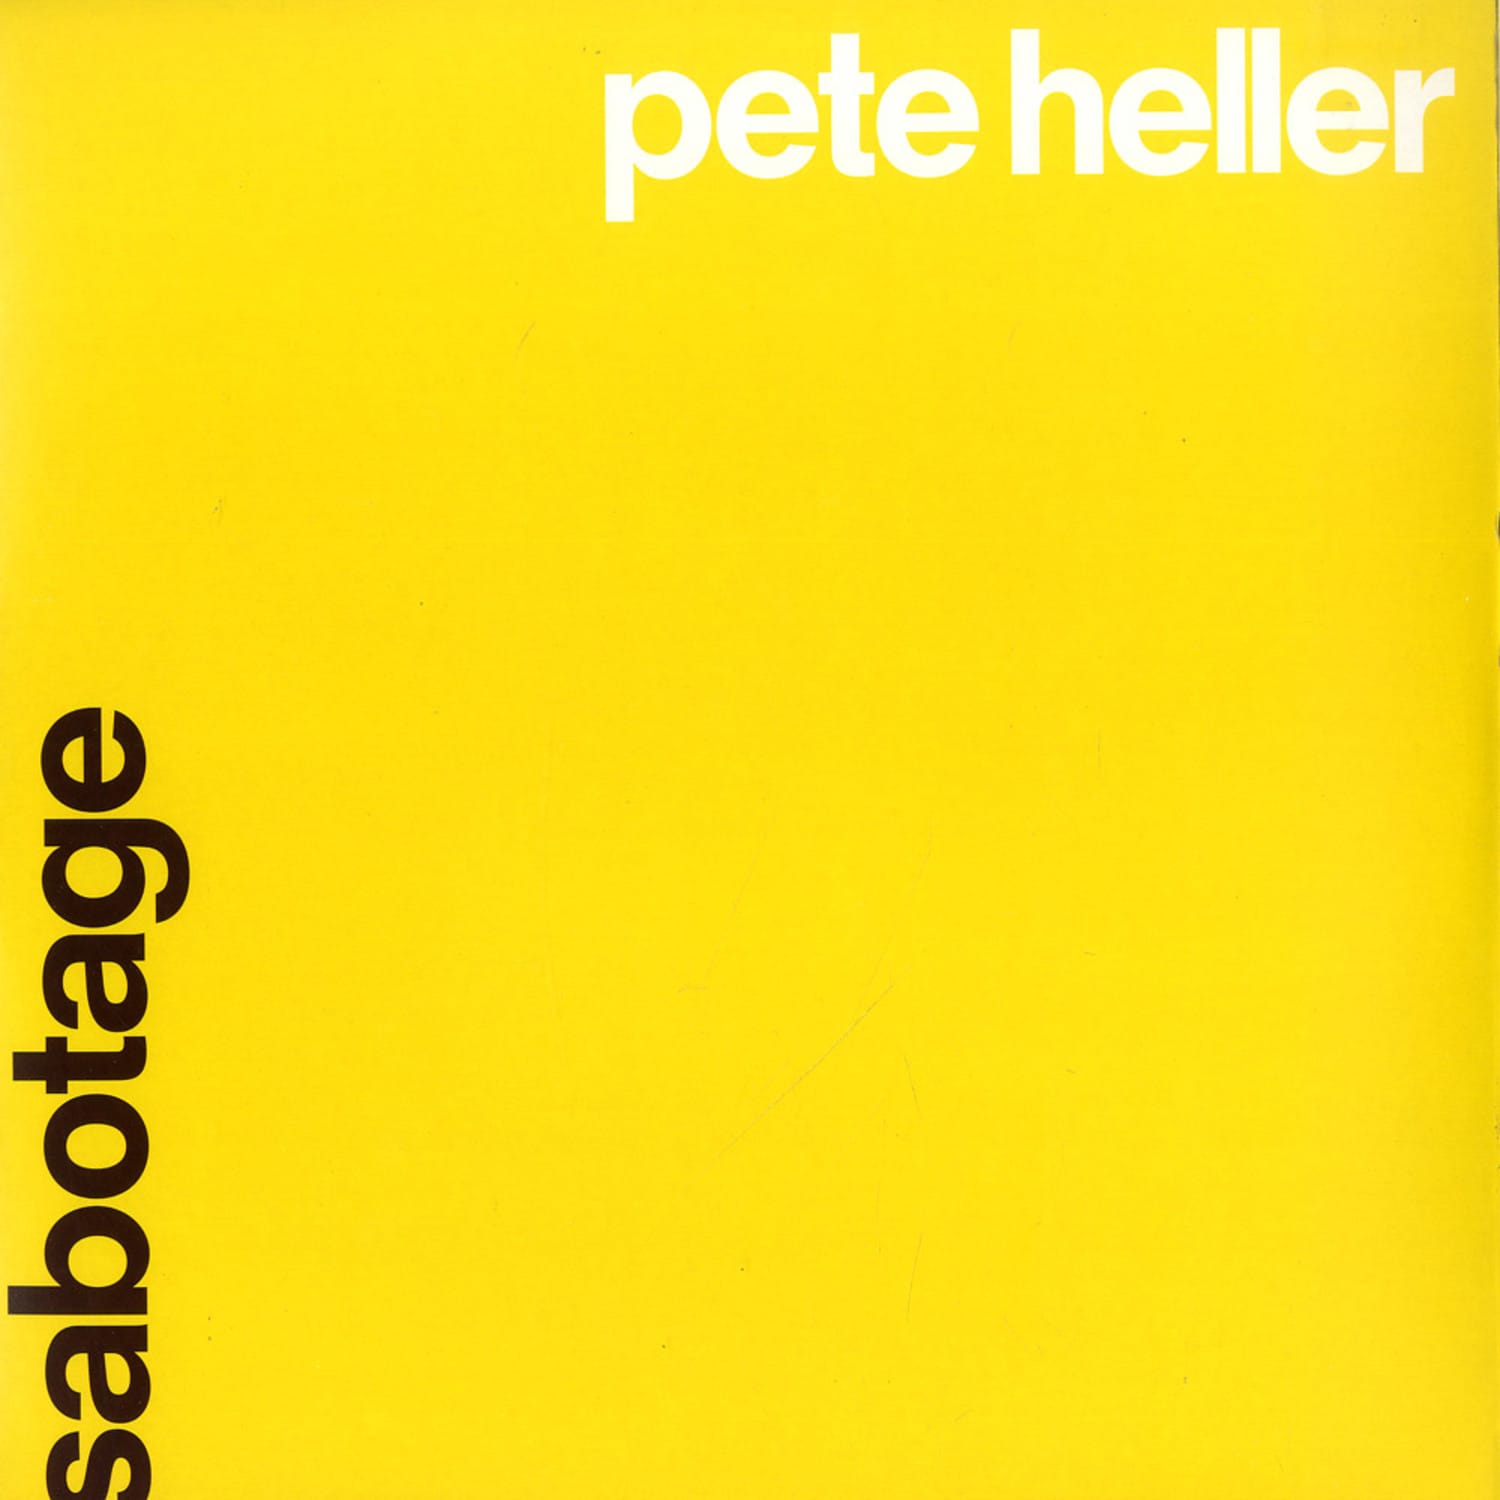 Pete Heller - SABOTAGE